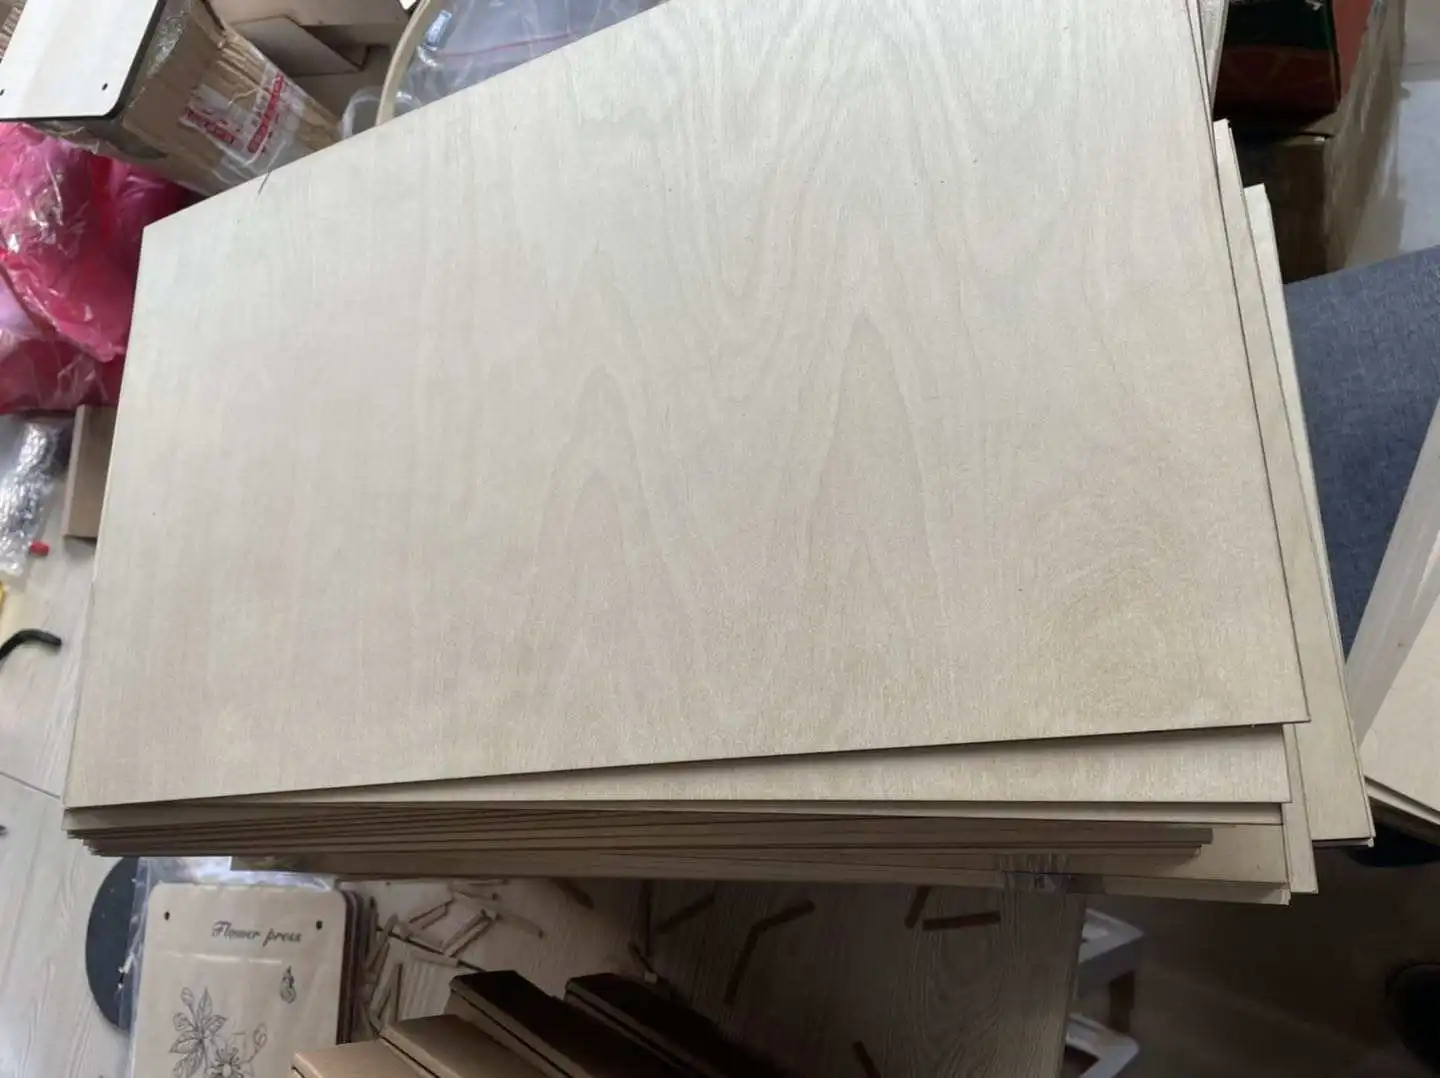 Baltic Birch Plywood, 3 mm 1/8x12x20 Inch Craft Wood, Pack of 20 B/BB Grade